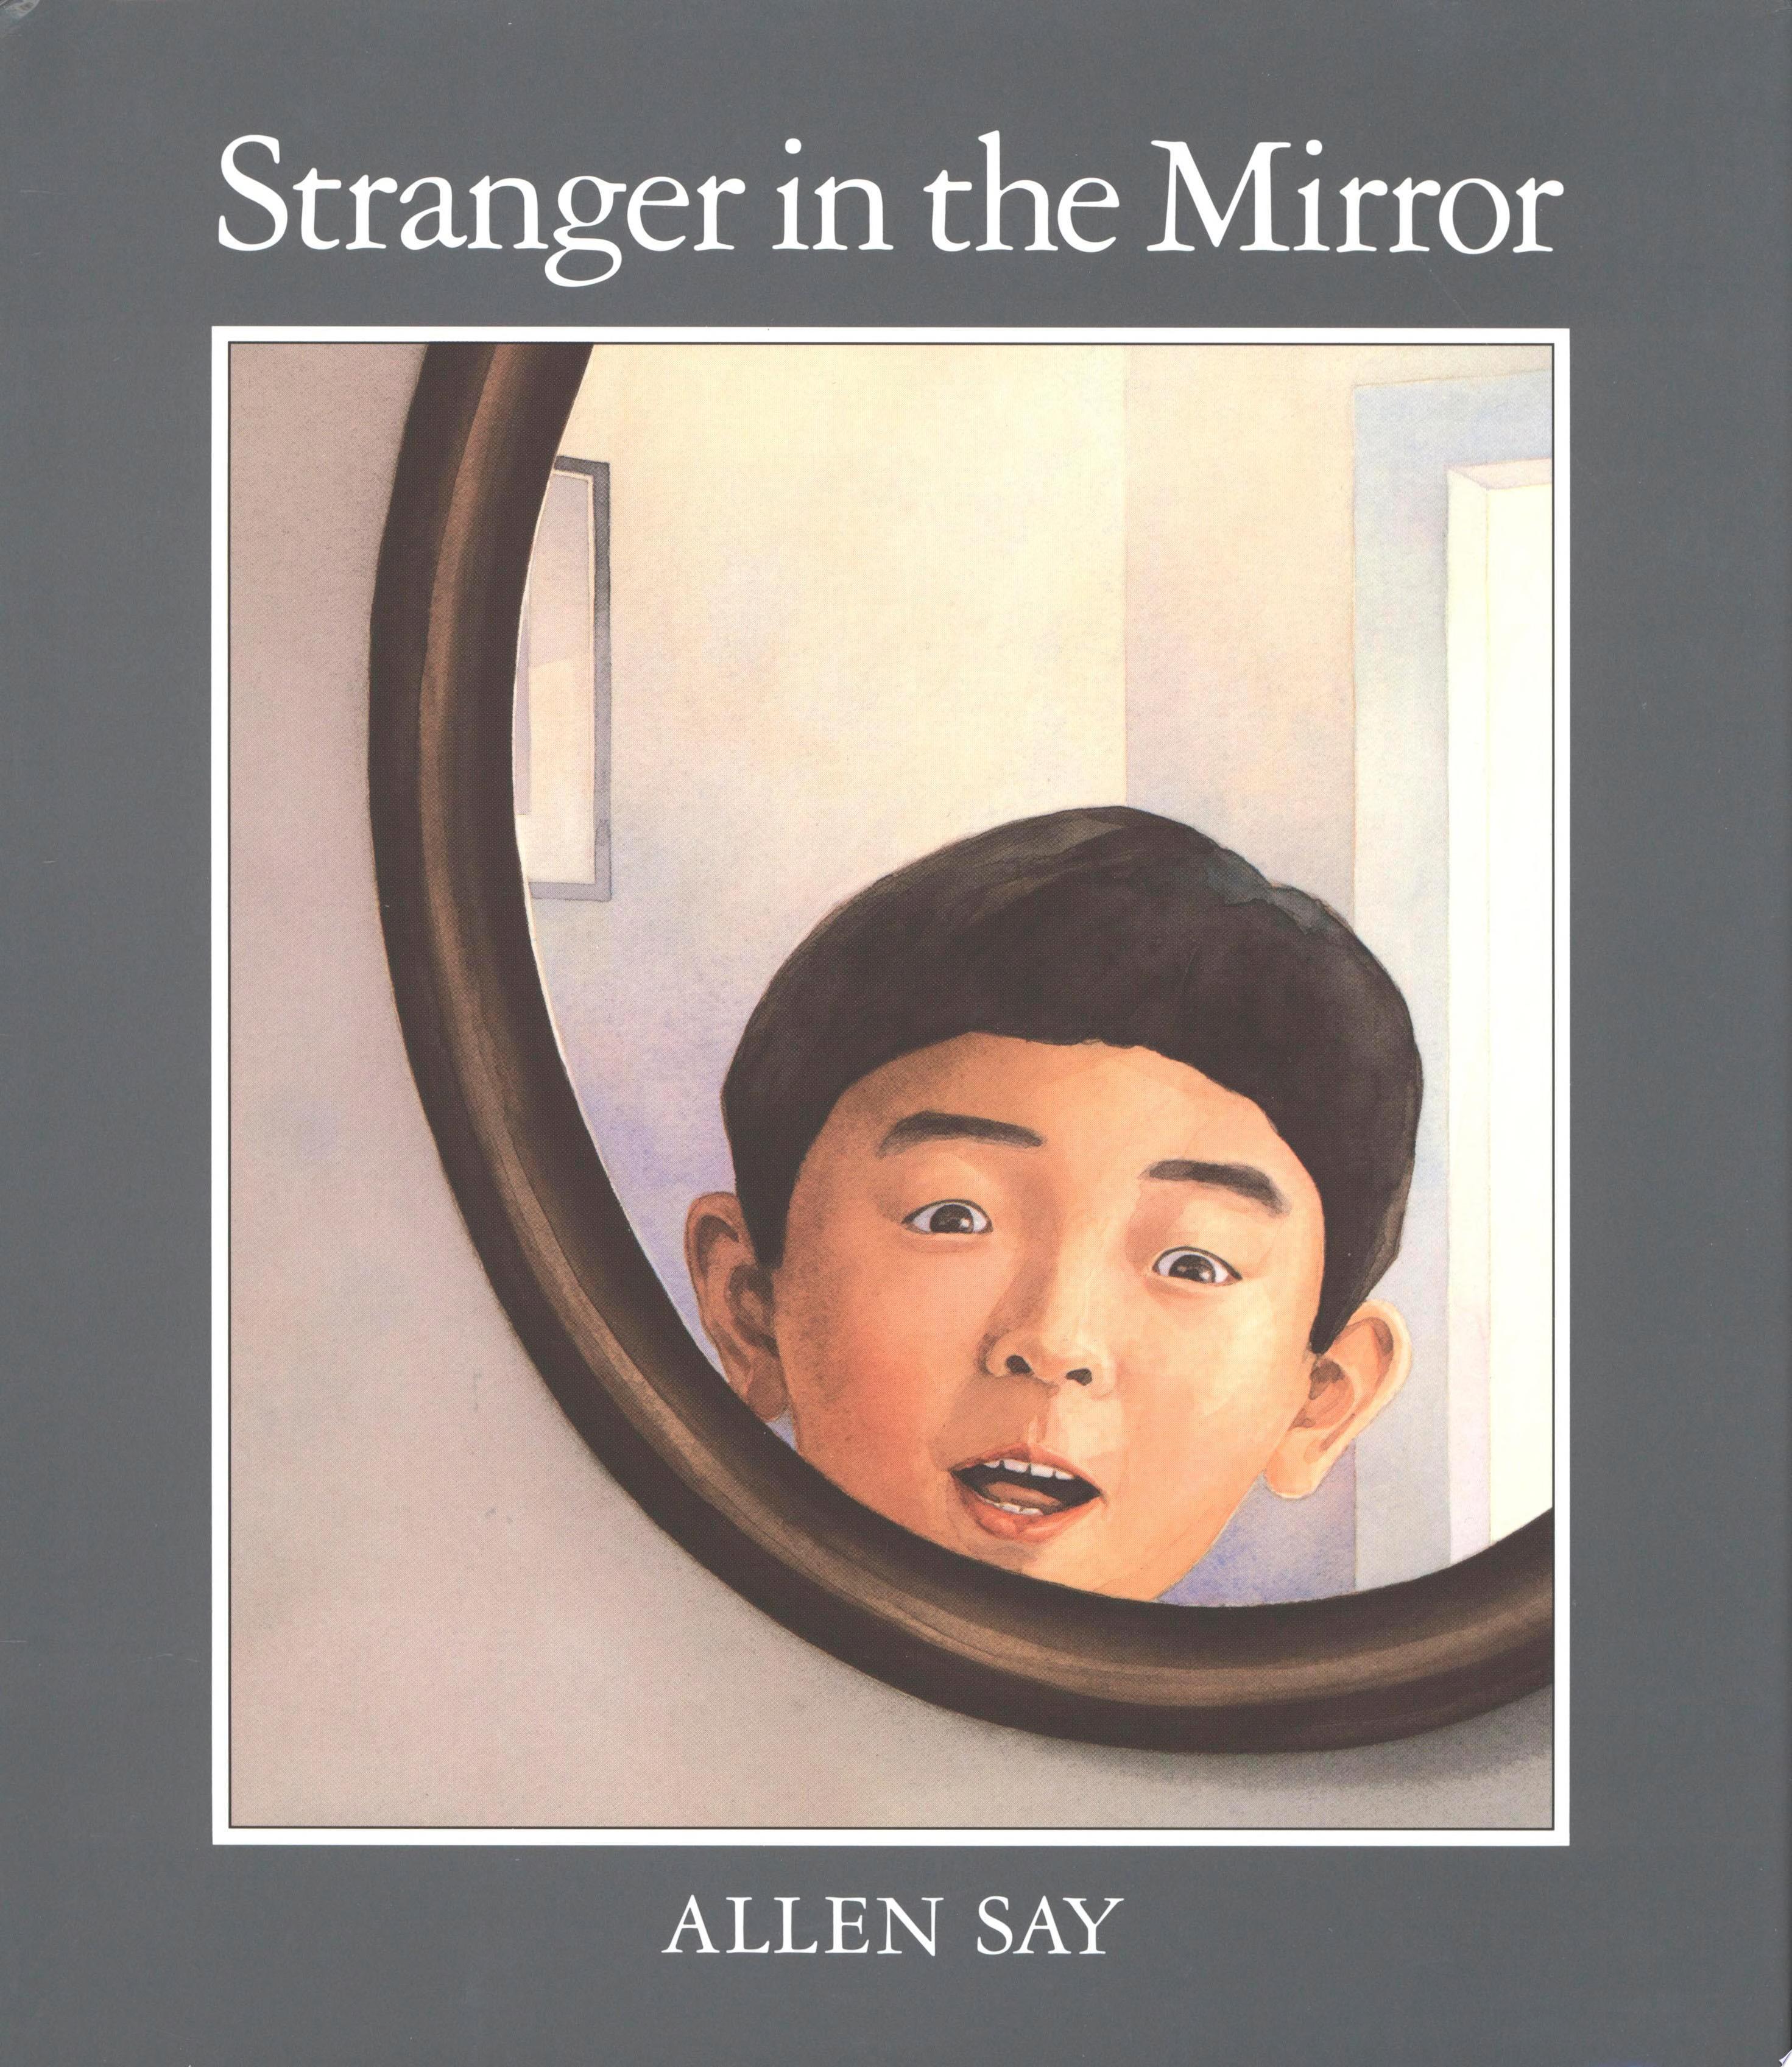 Image for "Stranger in the Mirror"